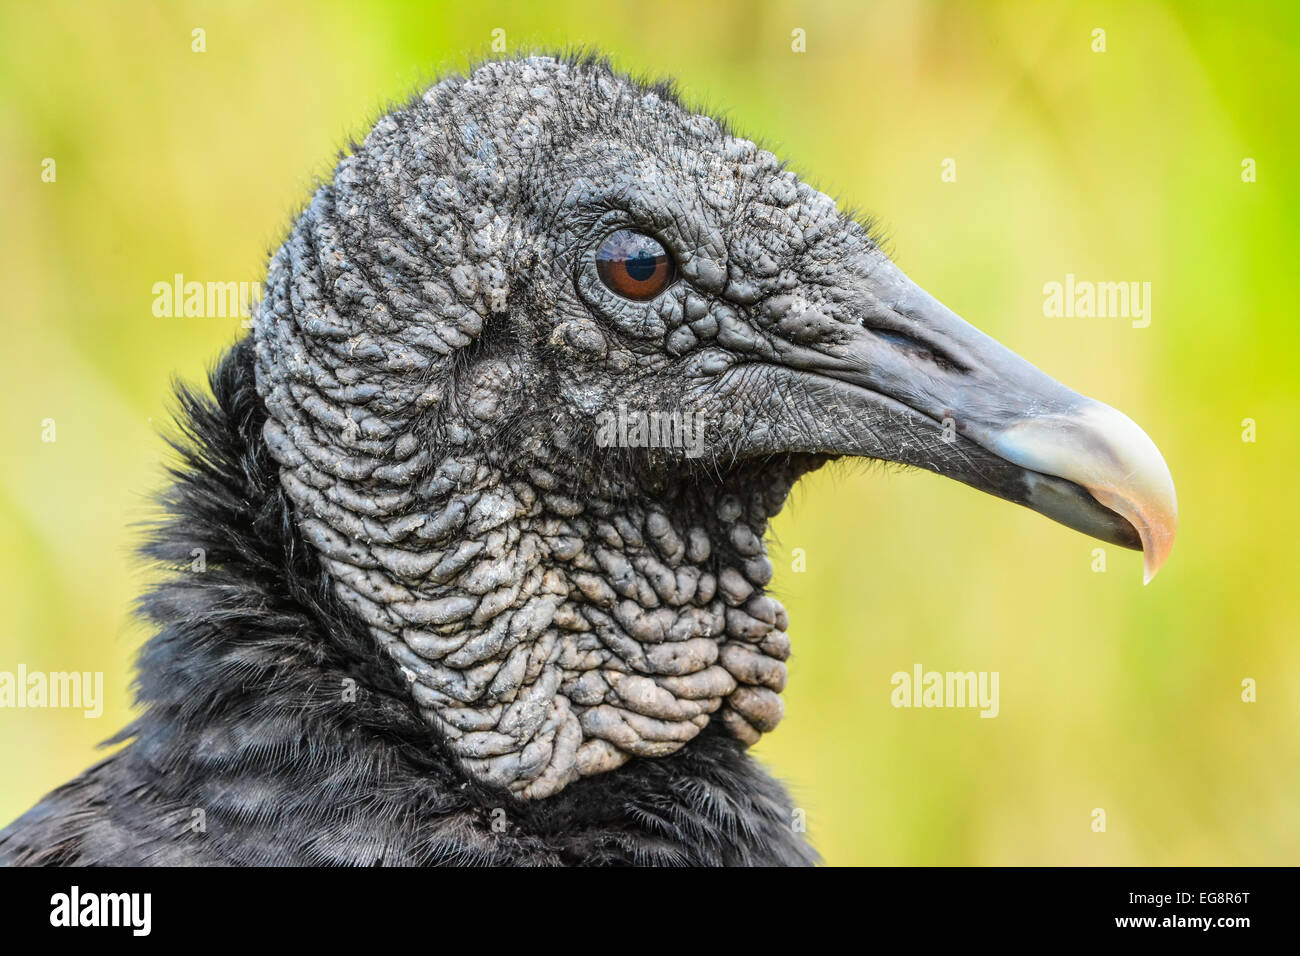 Closeup portrait of a Black vulture (Coragyps atratus) also known as the American black vulture, Everglades, Florida Stock Photo